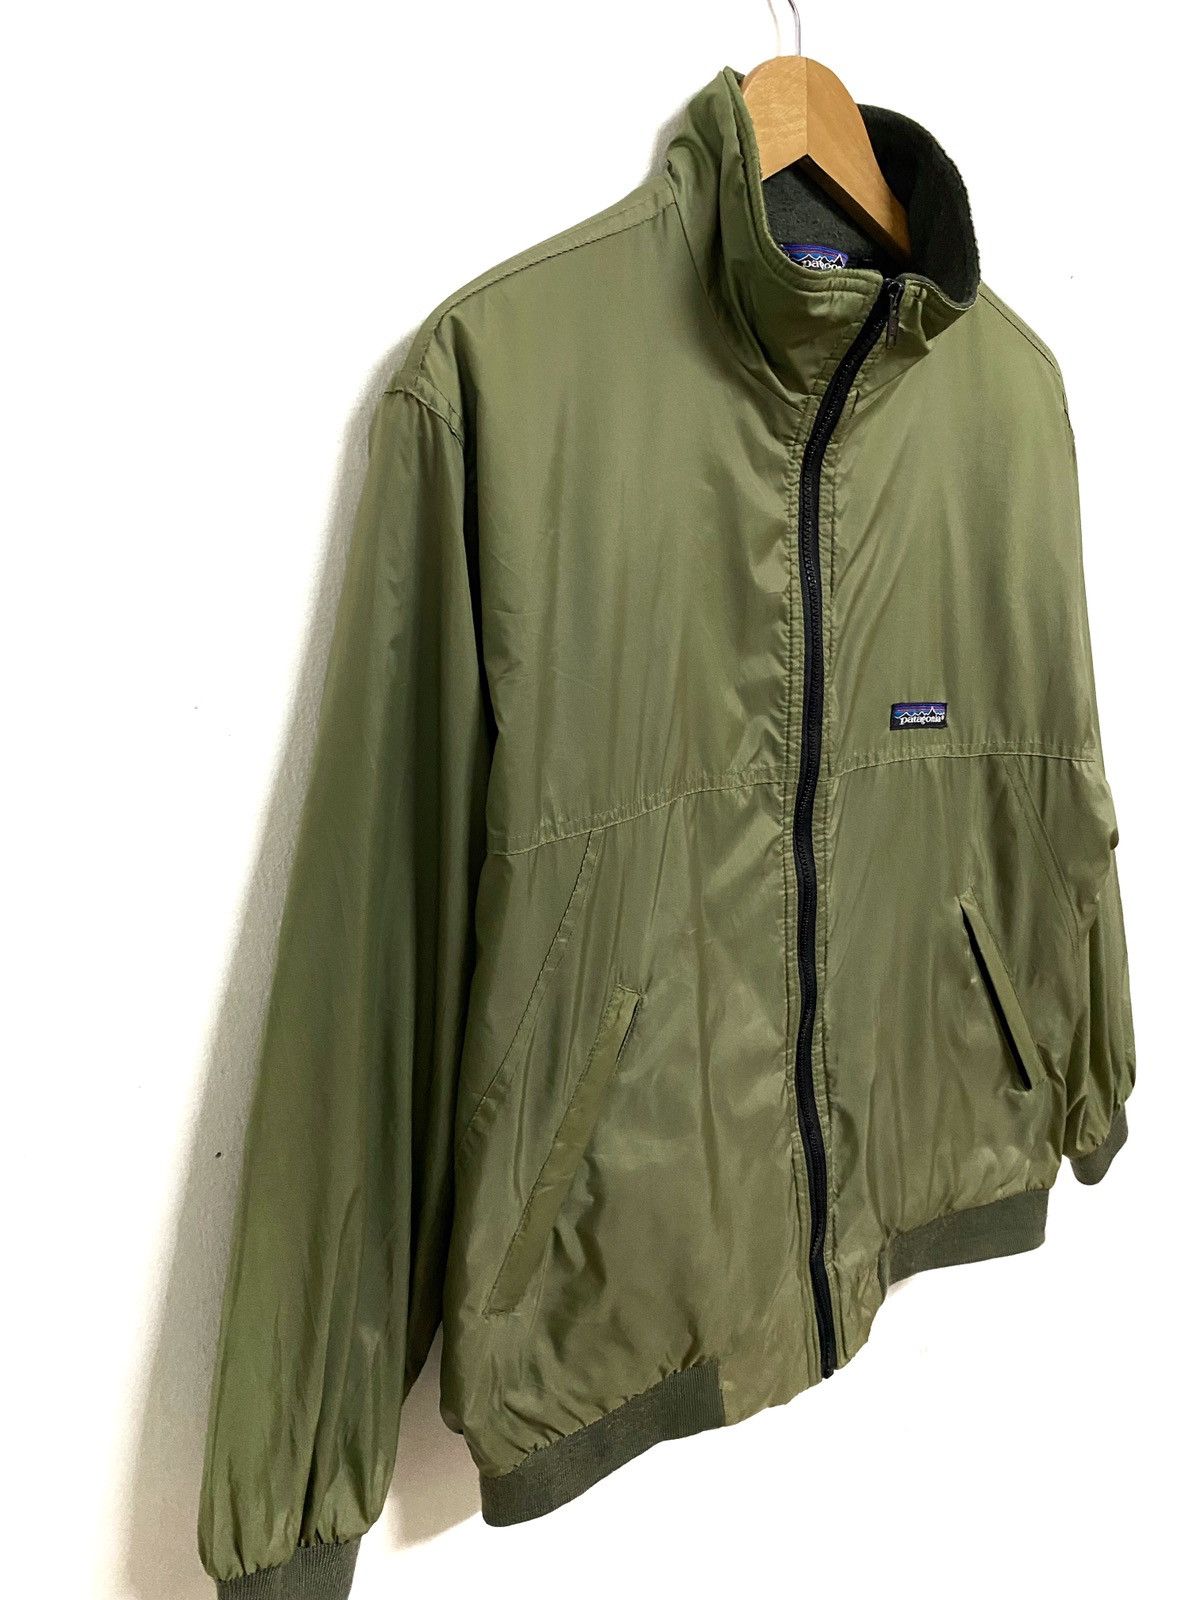 Vintage Patagonia Fleece Lined Zip Up Jacket - 5